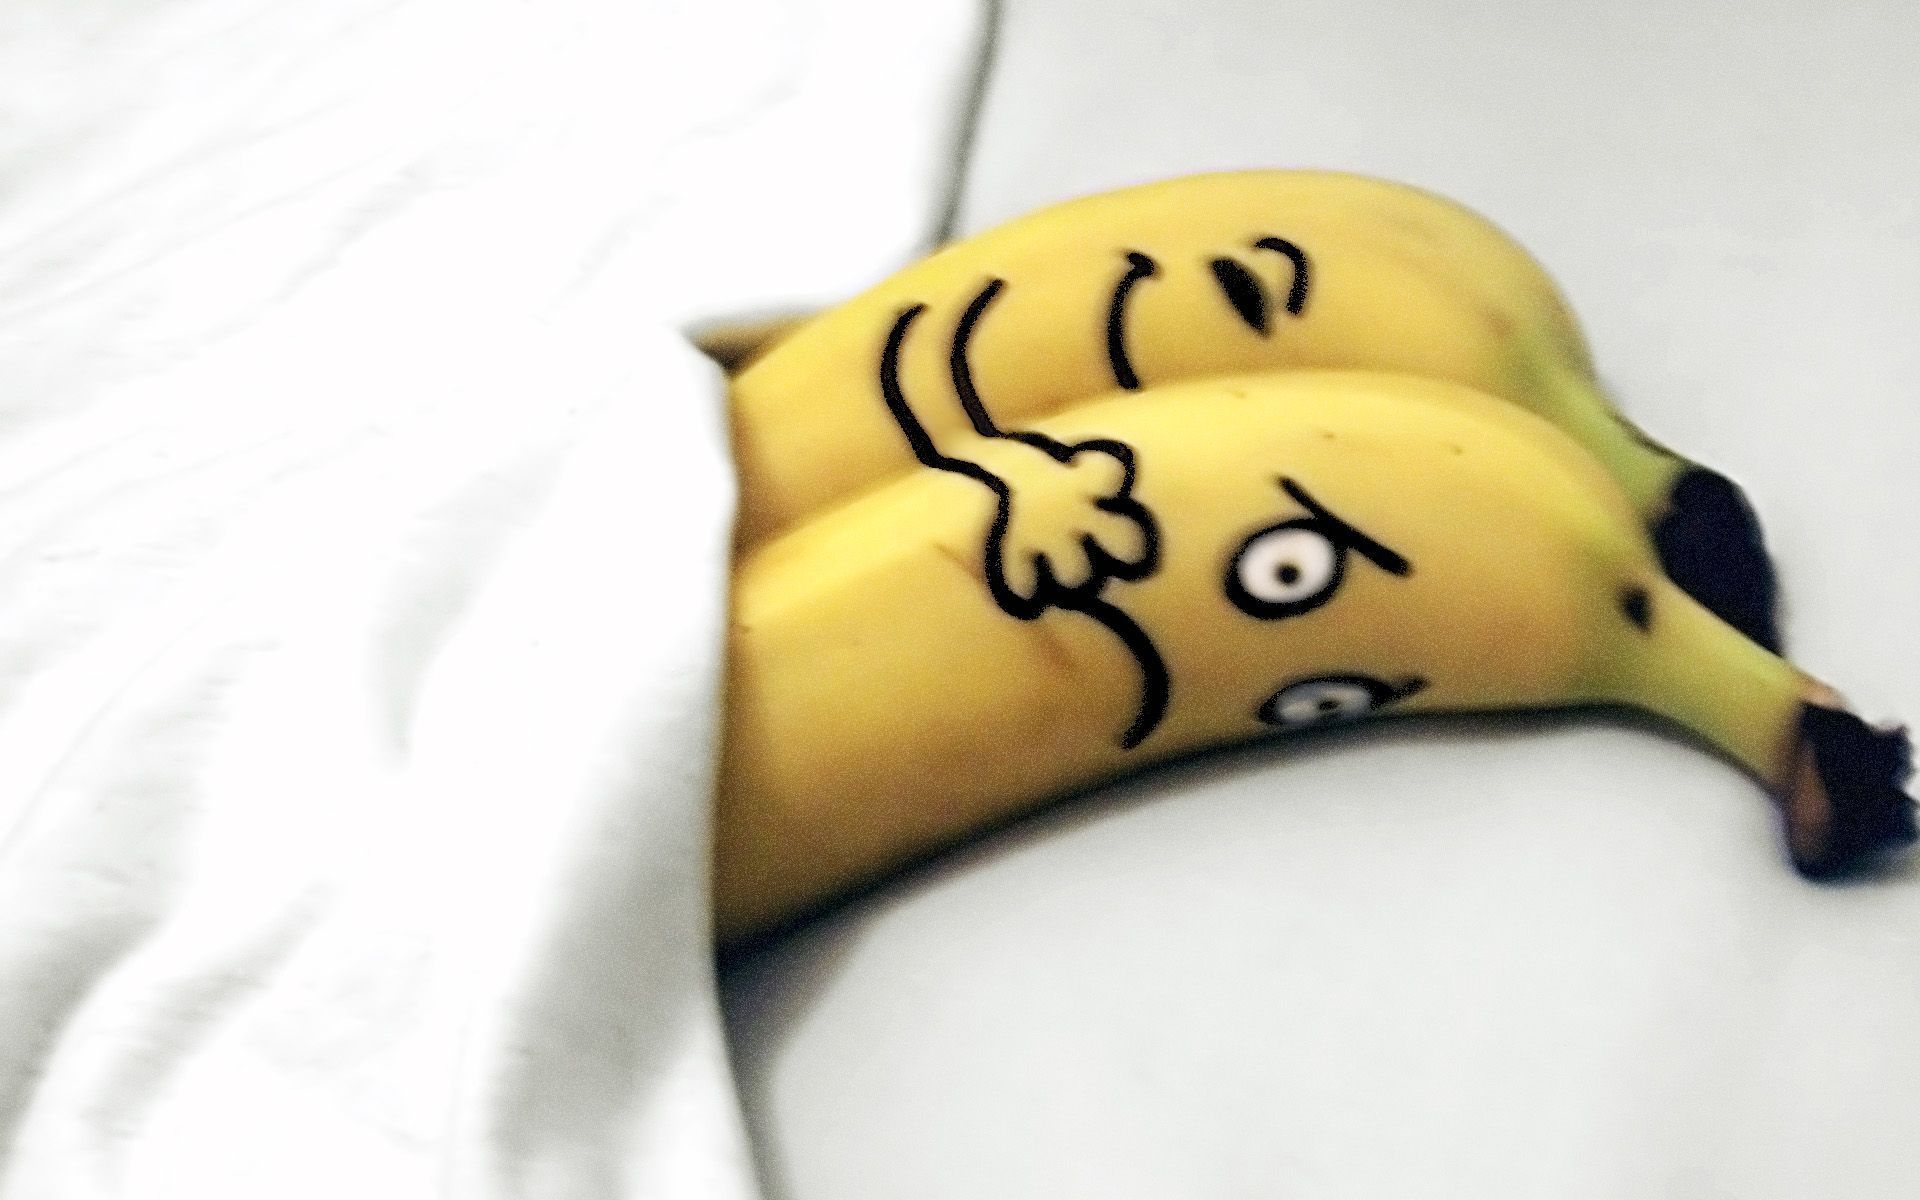 Banana Sick Funny Image Wallpaper High Resolution